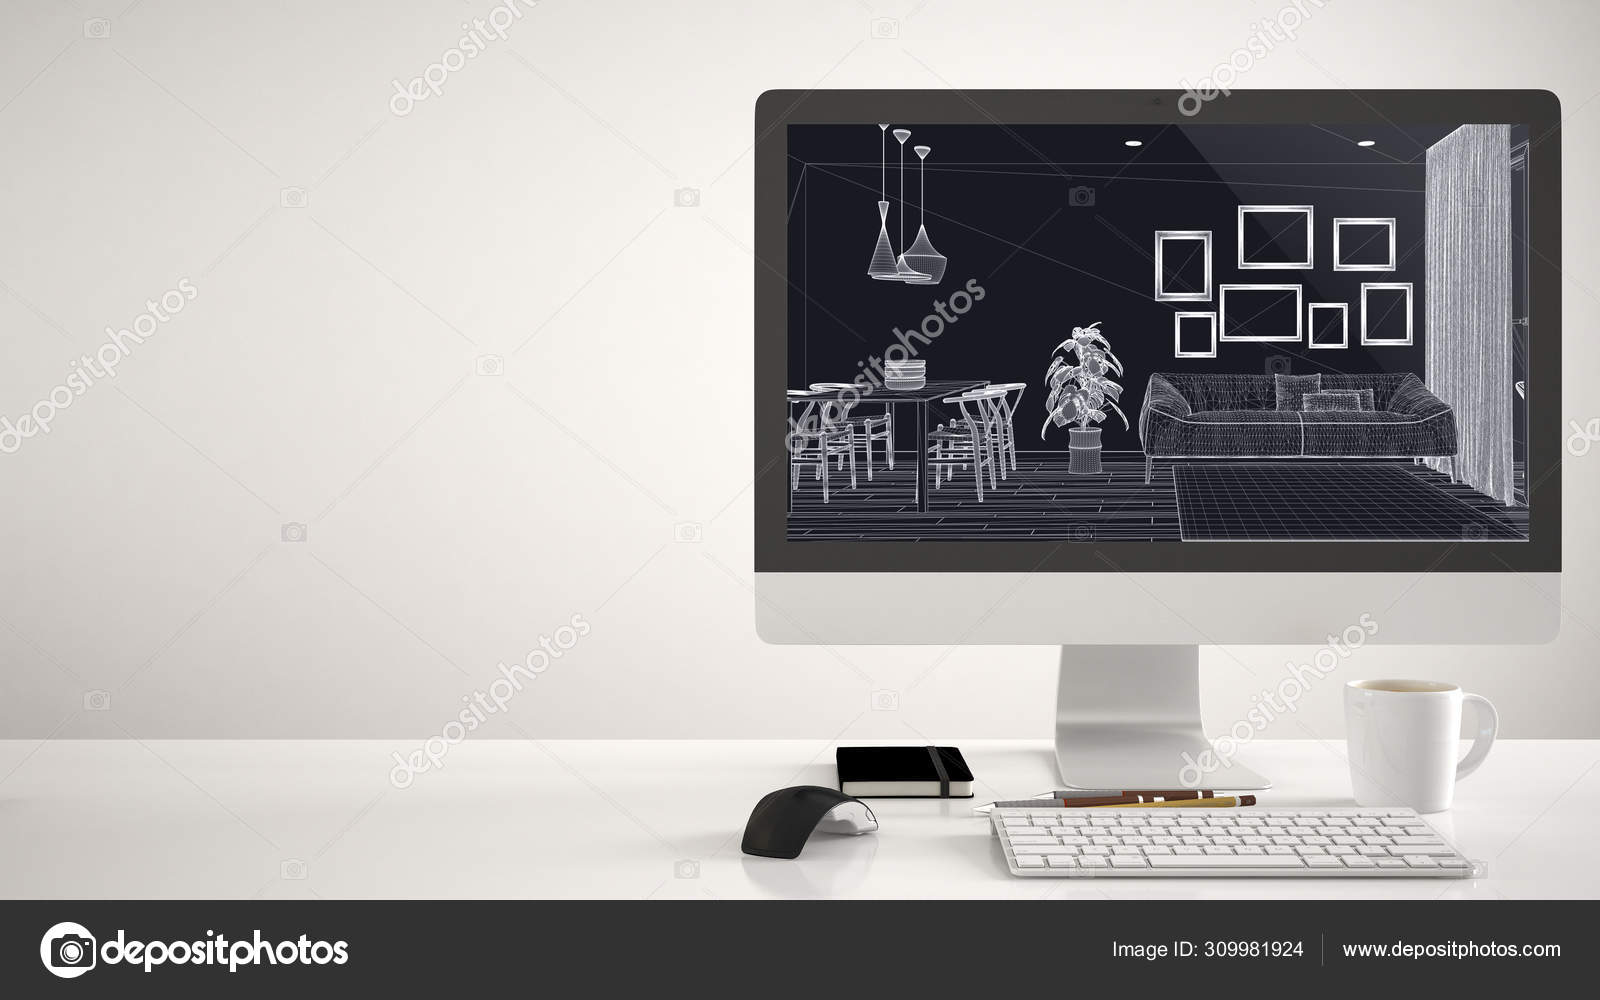 Architect House Project Concept Desktop Computer On White